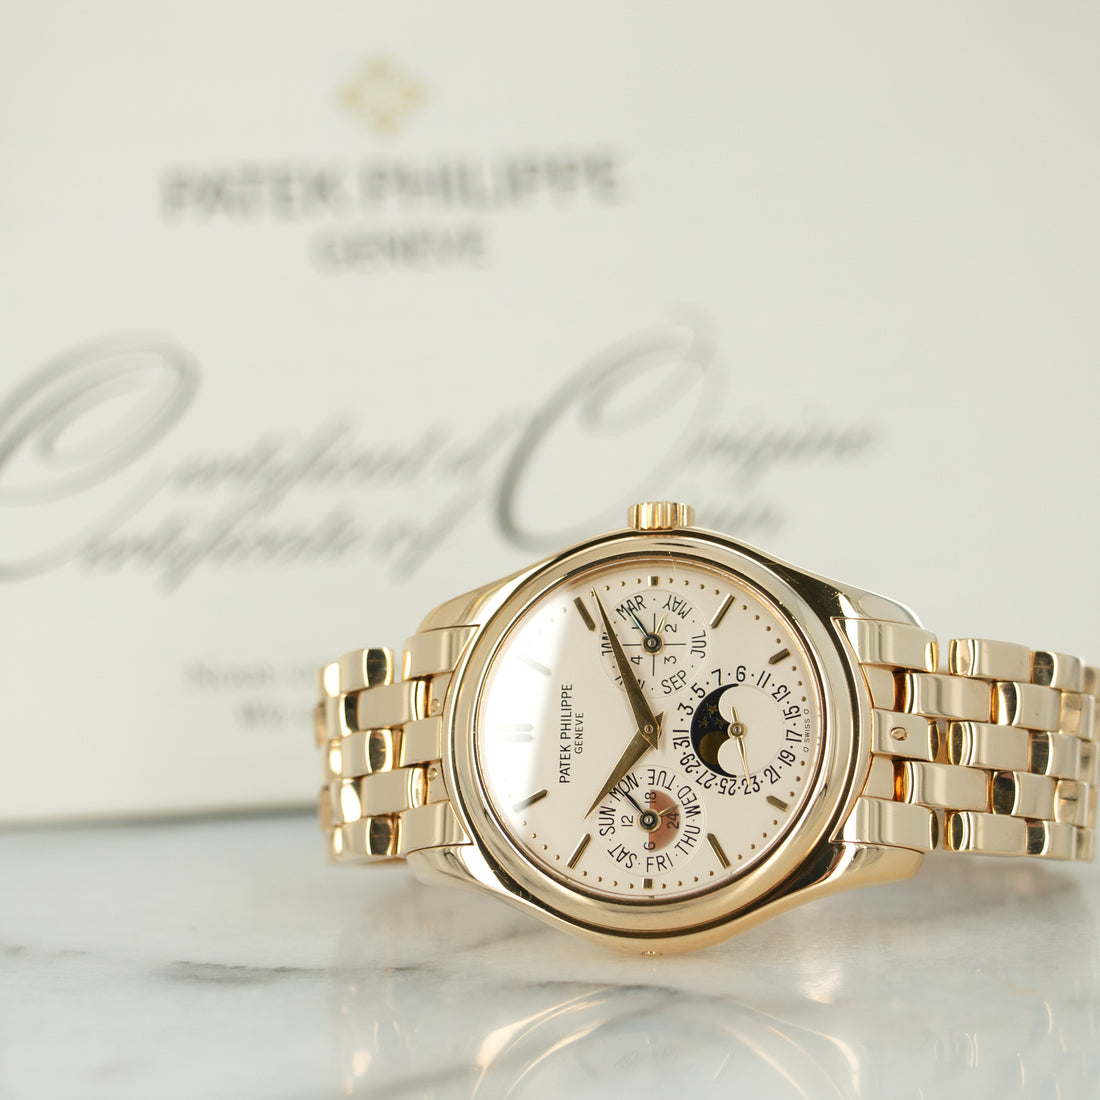 Patek Philippe Yellow Gold Perpetual Calendar Watch, Ref. 5136